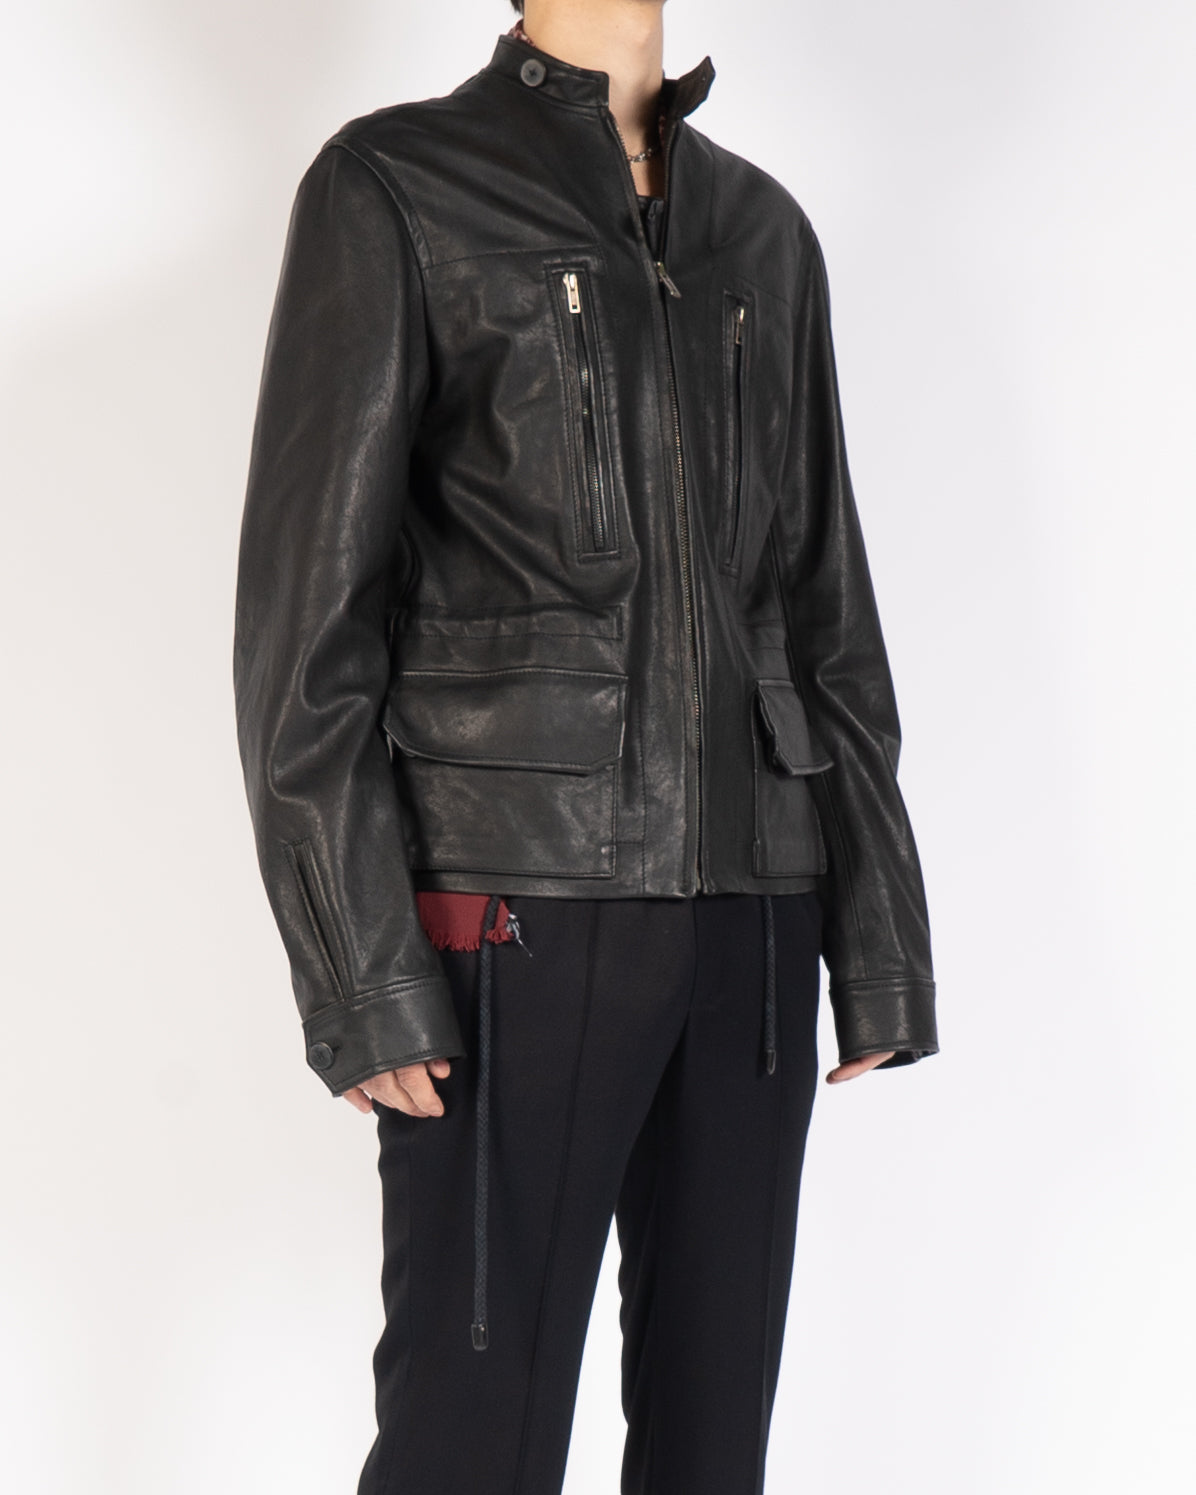 SS16 Classic Zipped Black Leather Jacket